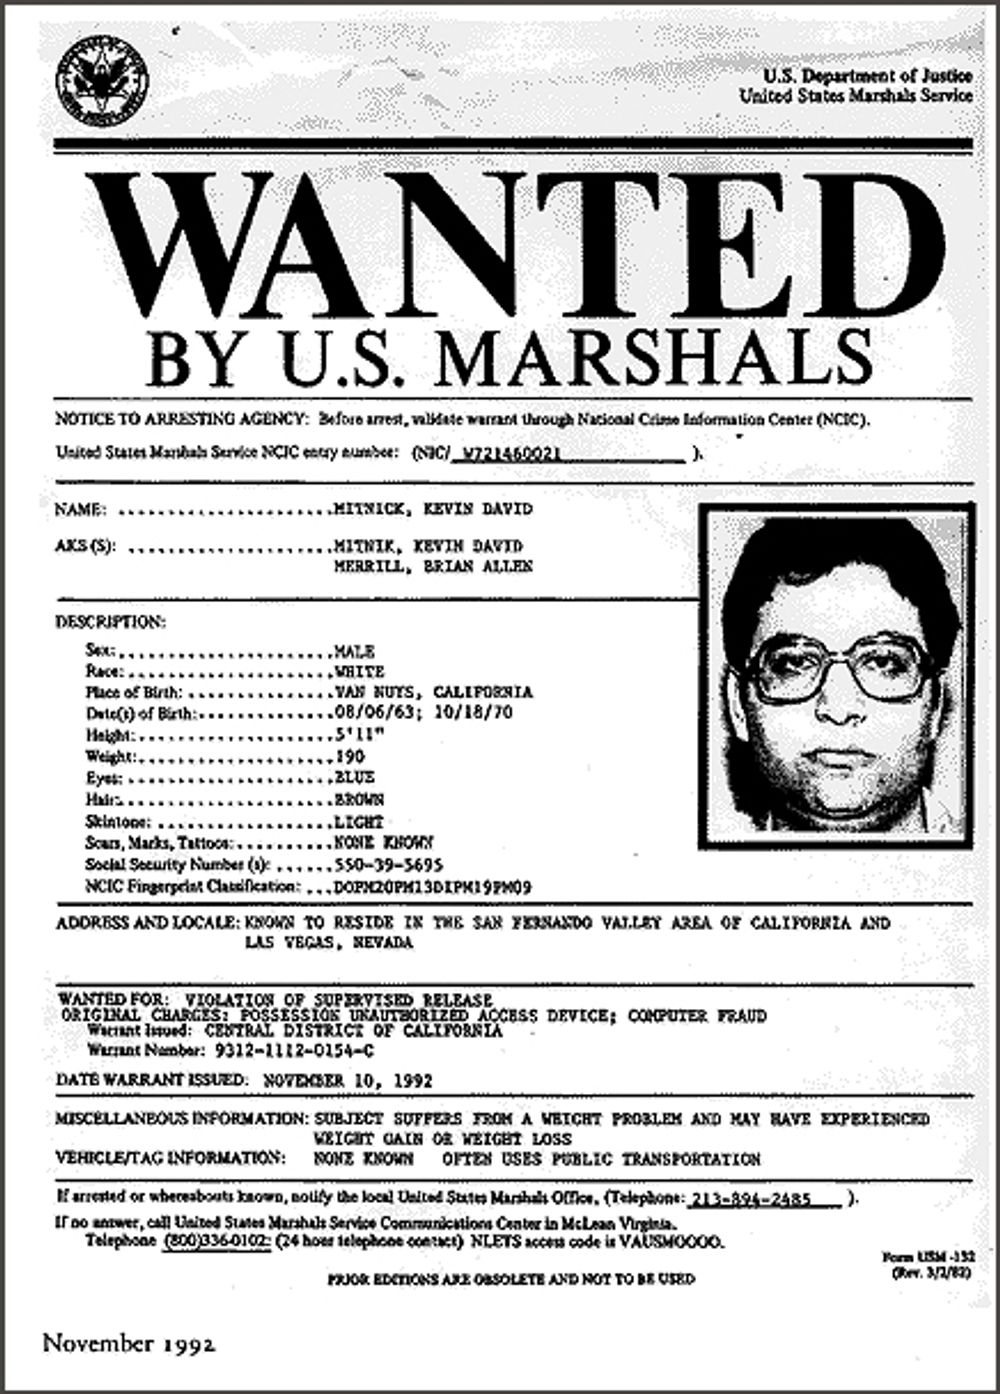 ETTERSØKT: Plakaten som gjorde Kevin Mitnick til en hackerlegende. FBI kaller han fortsatt for "The most wanted computer criminal in United States".